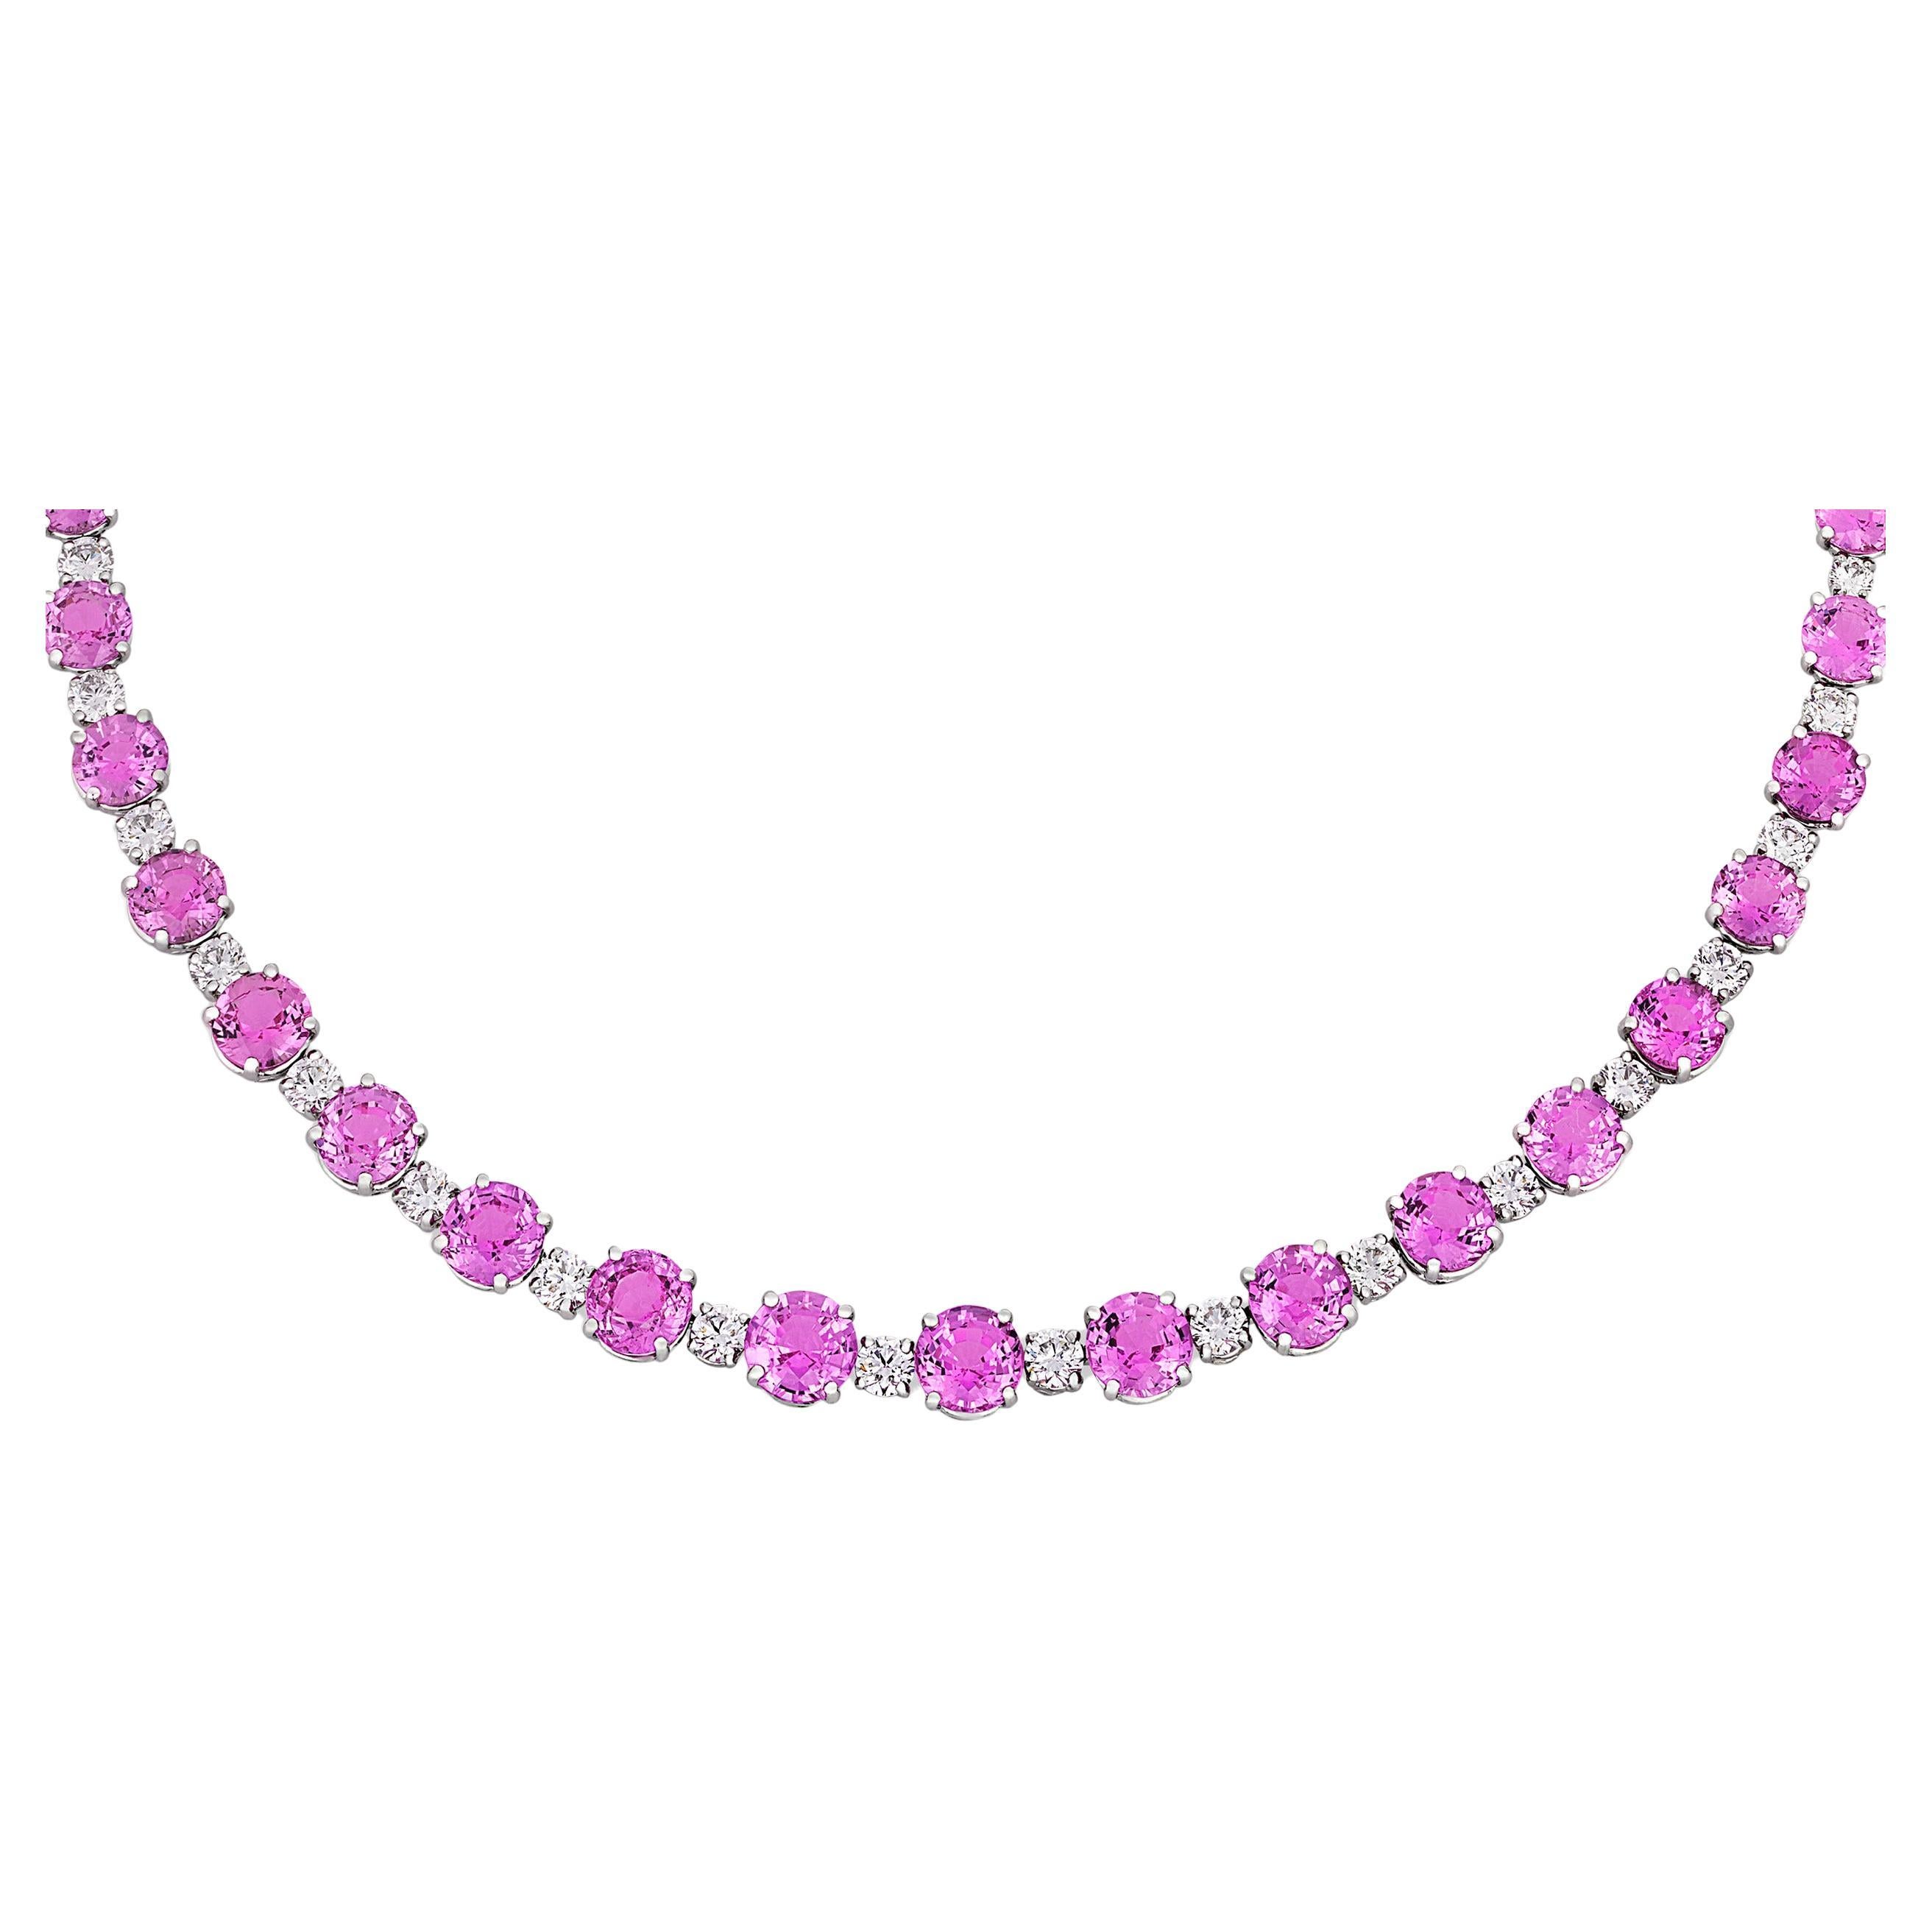 Pink Sapphire and Diamond Necklace by Oscar Heyman